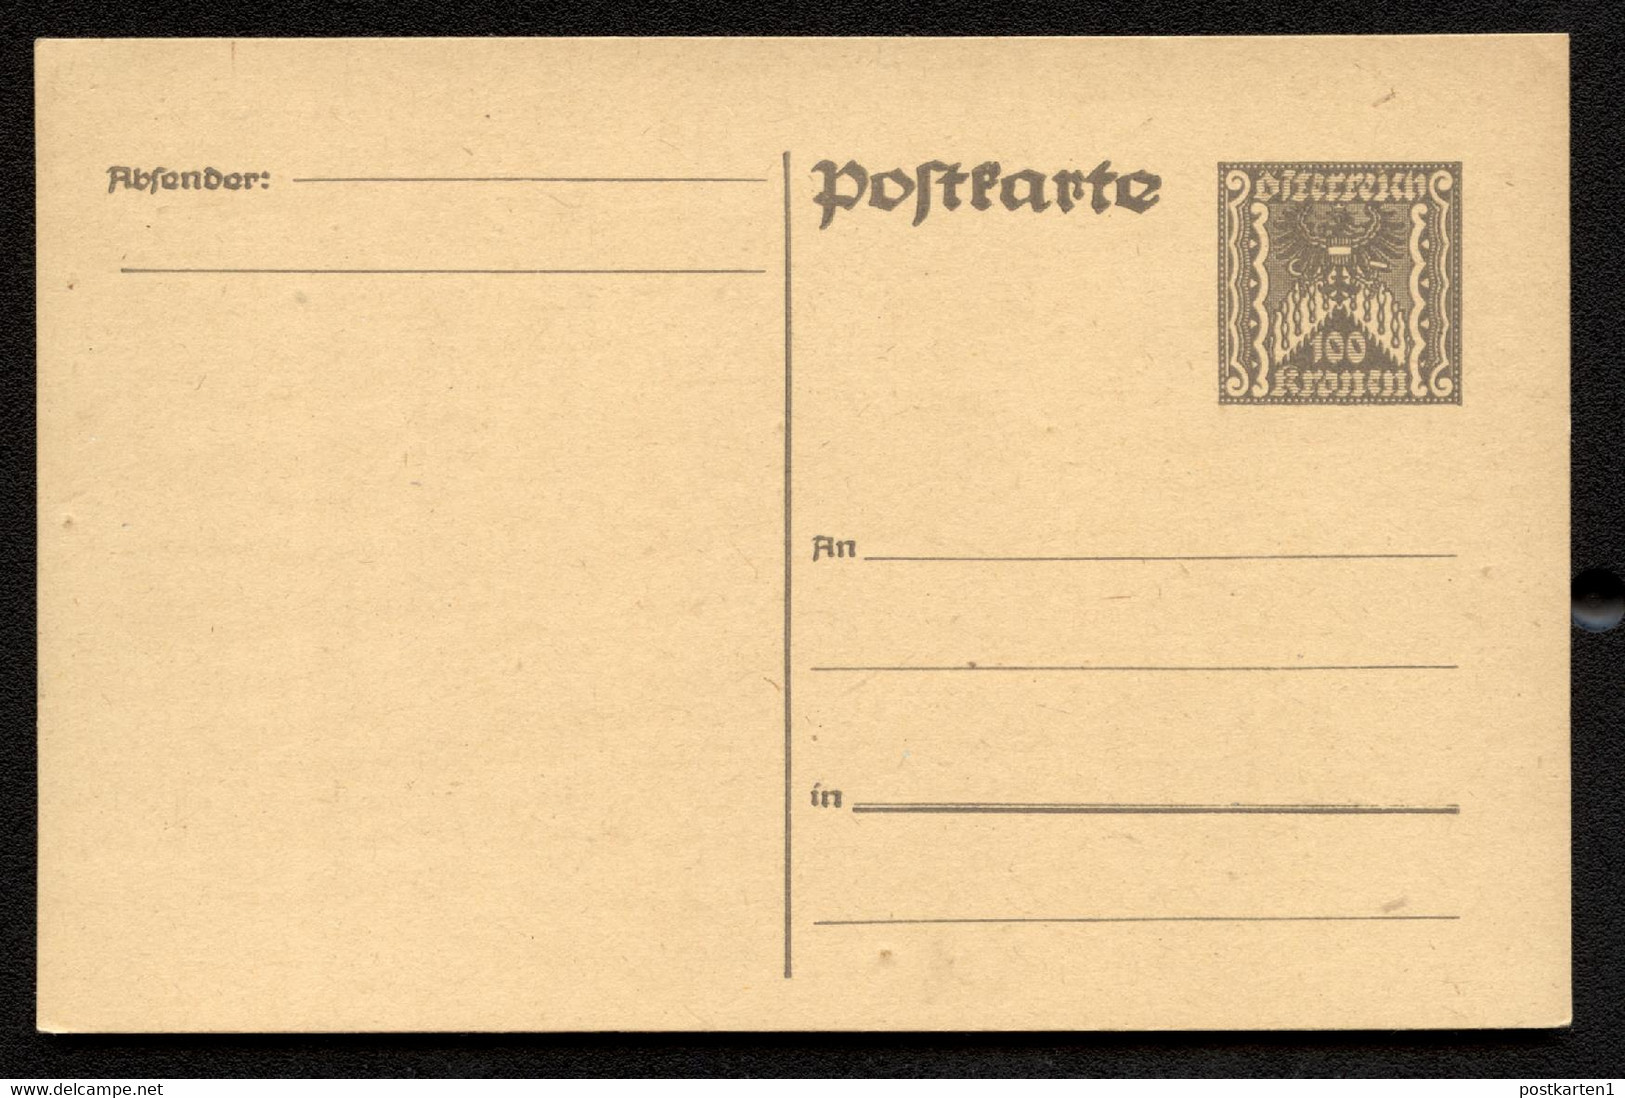 Postkarte P257 Postfrisch Feinst 1922 Kat.20,00 € - Cartoline